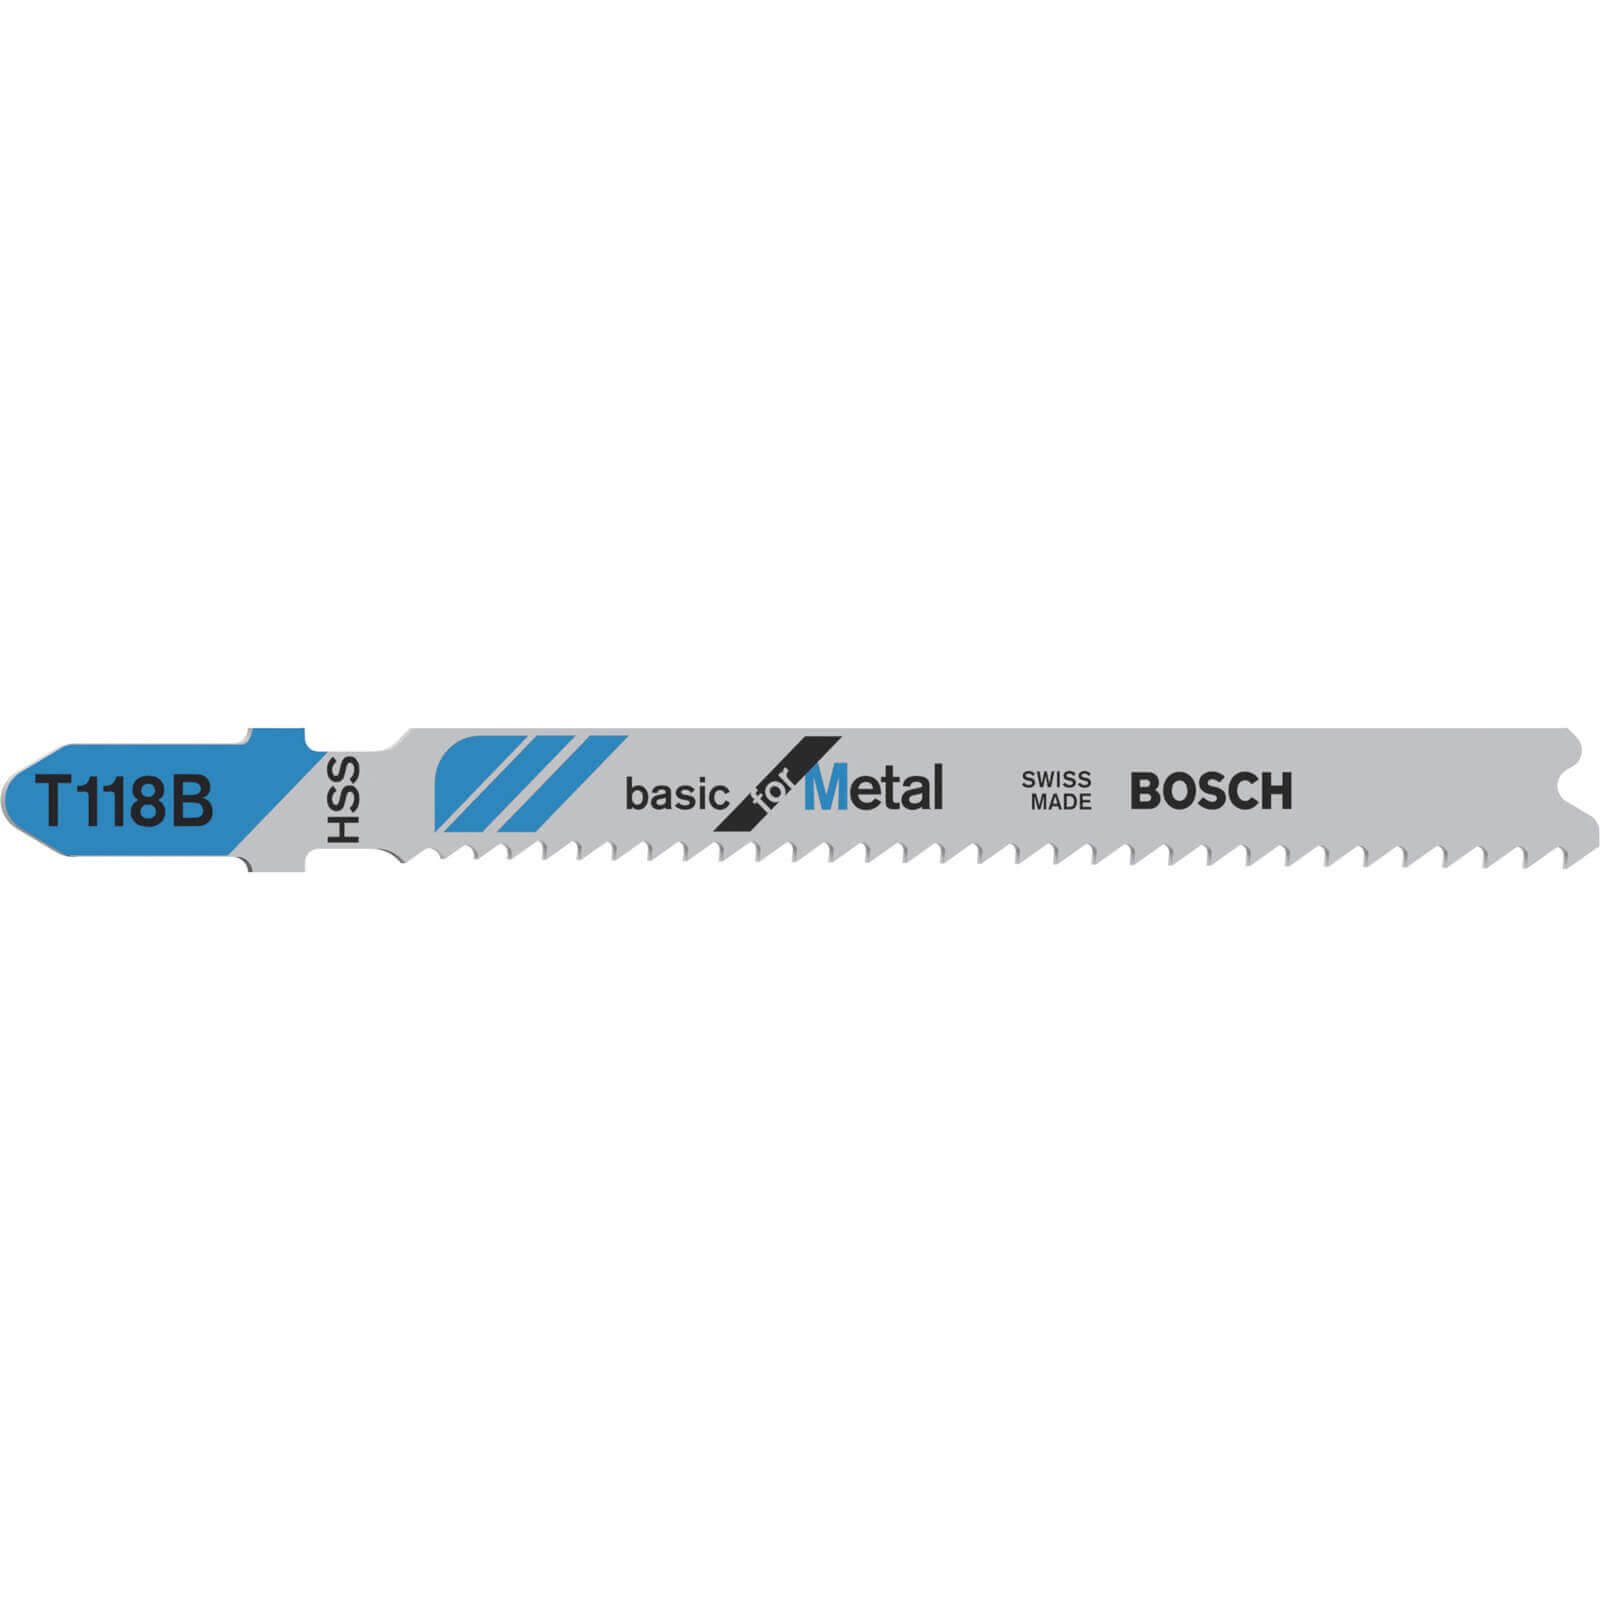 Photo of Bosch T118 B Metal Cutting Jigsaw Blades Pack Of 5